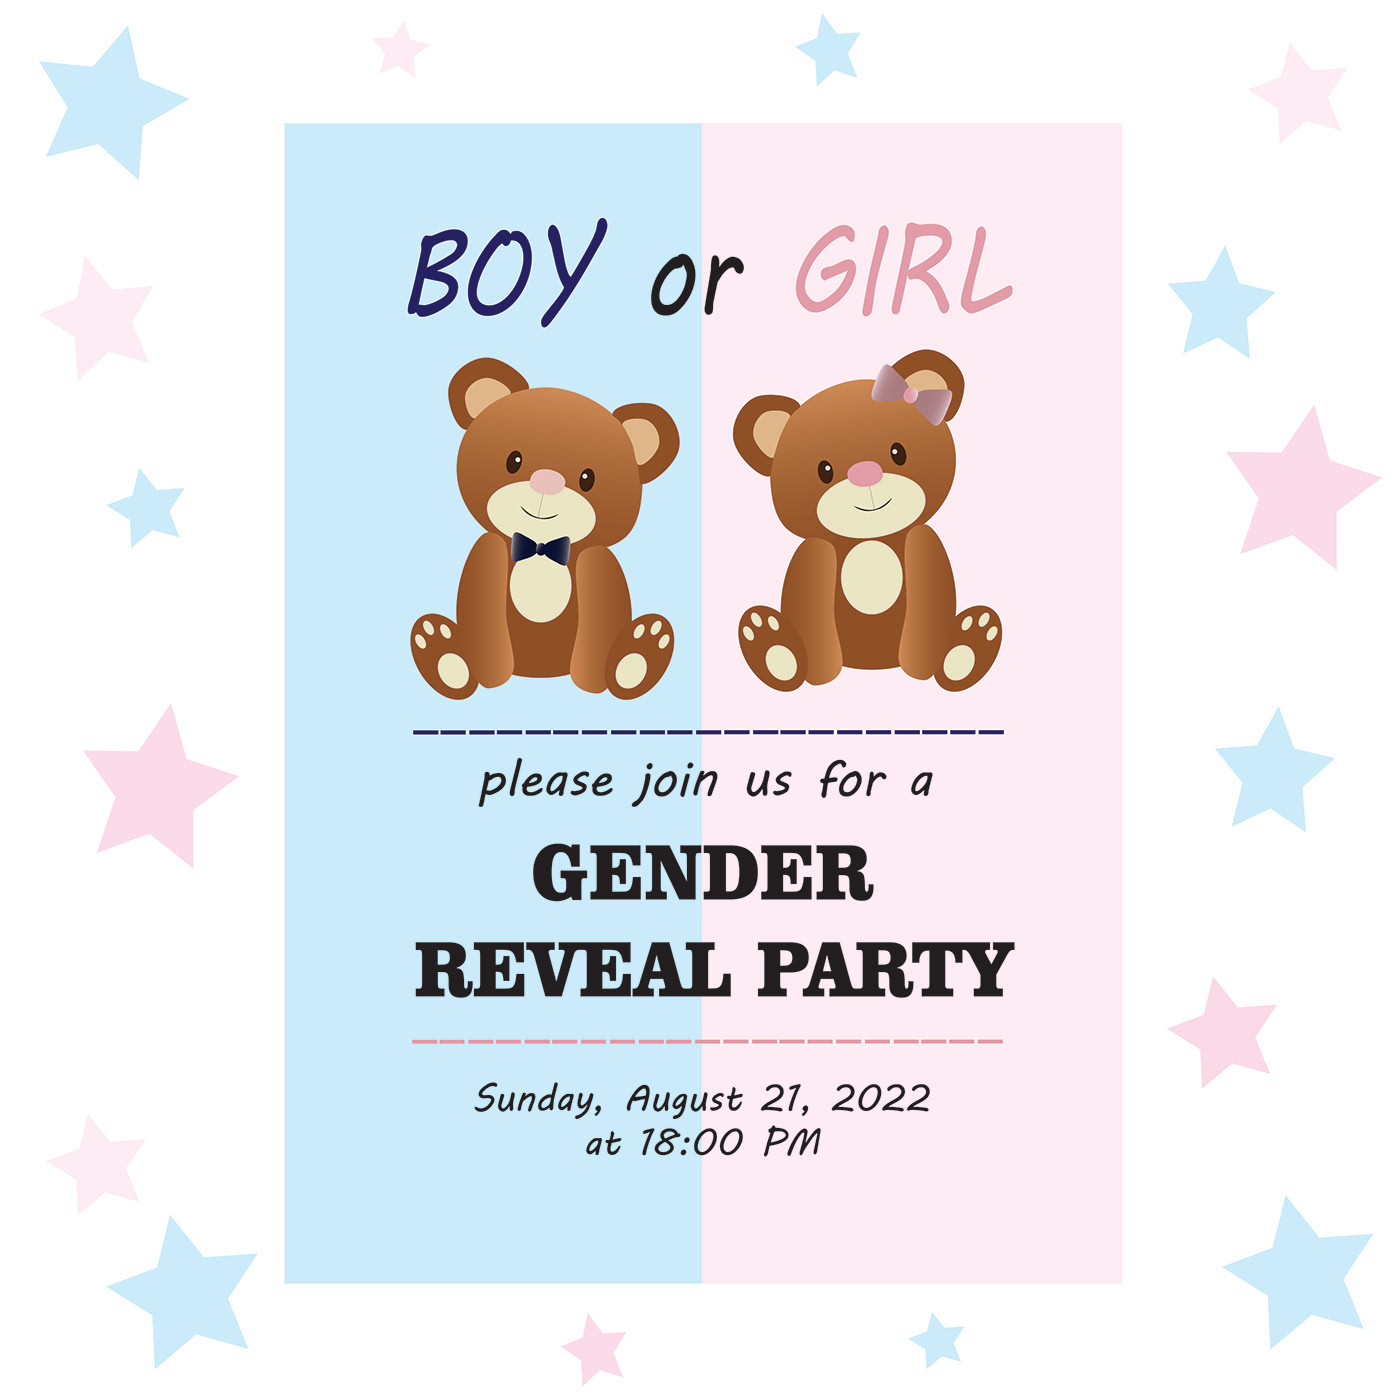 bor or girl gender reveal Invitation invitation design